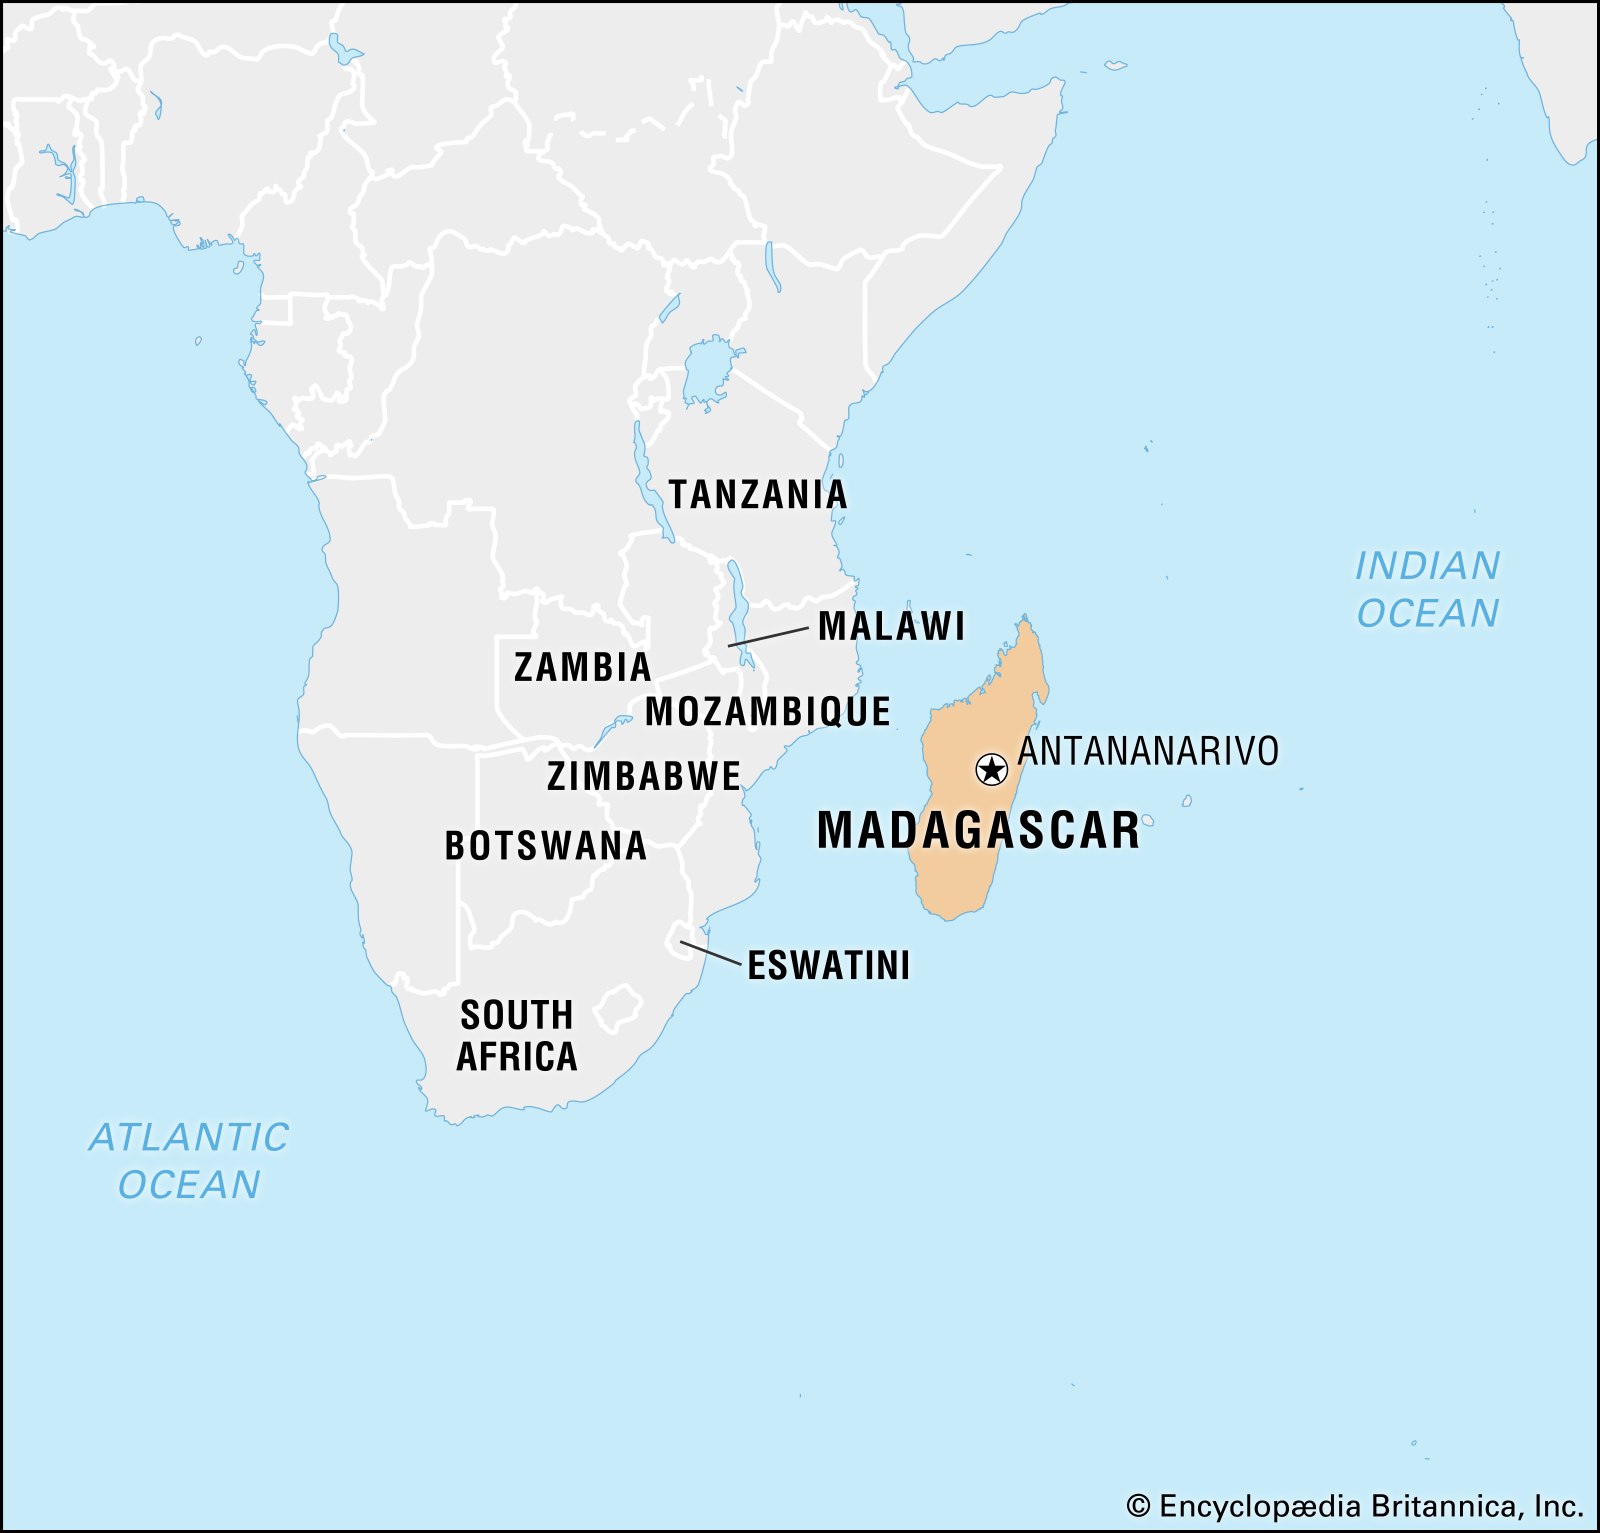 Where is Madagascar?